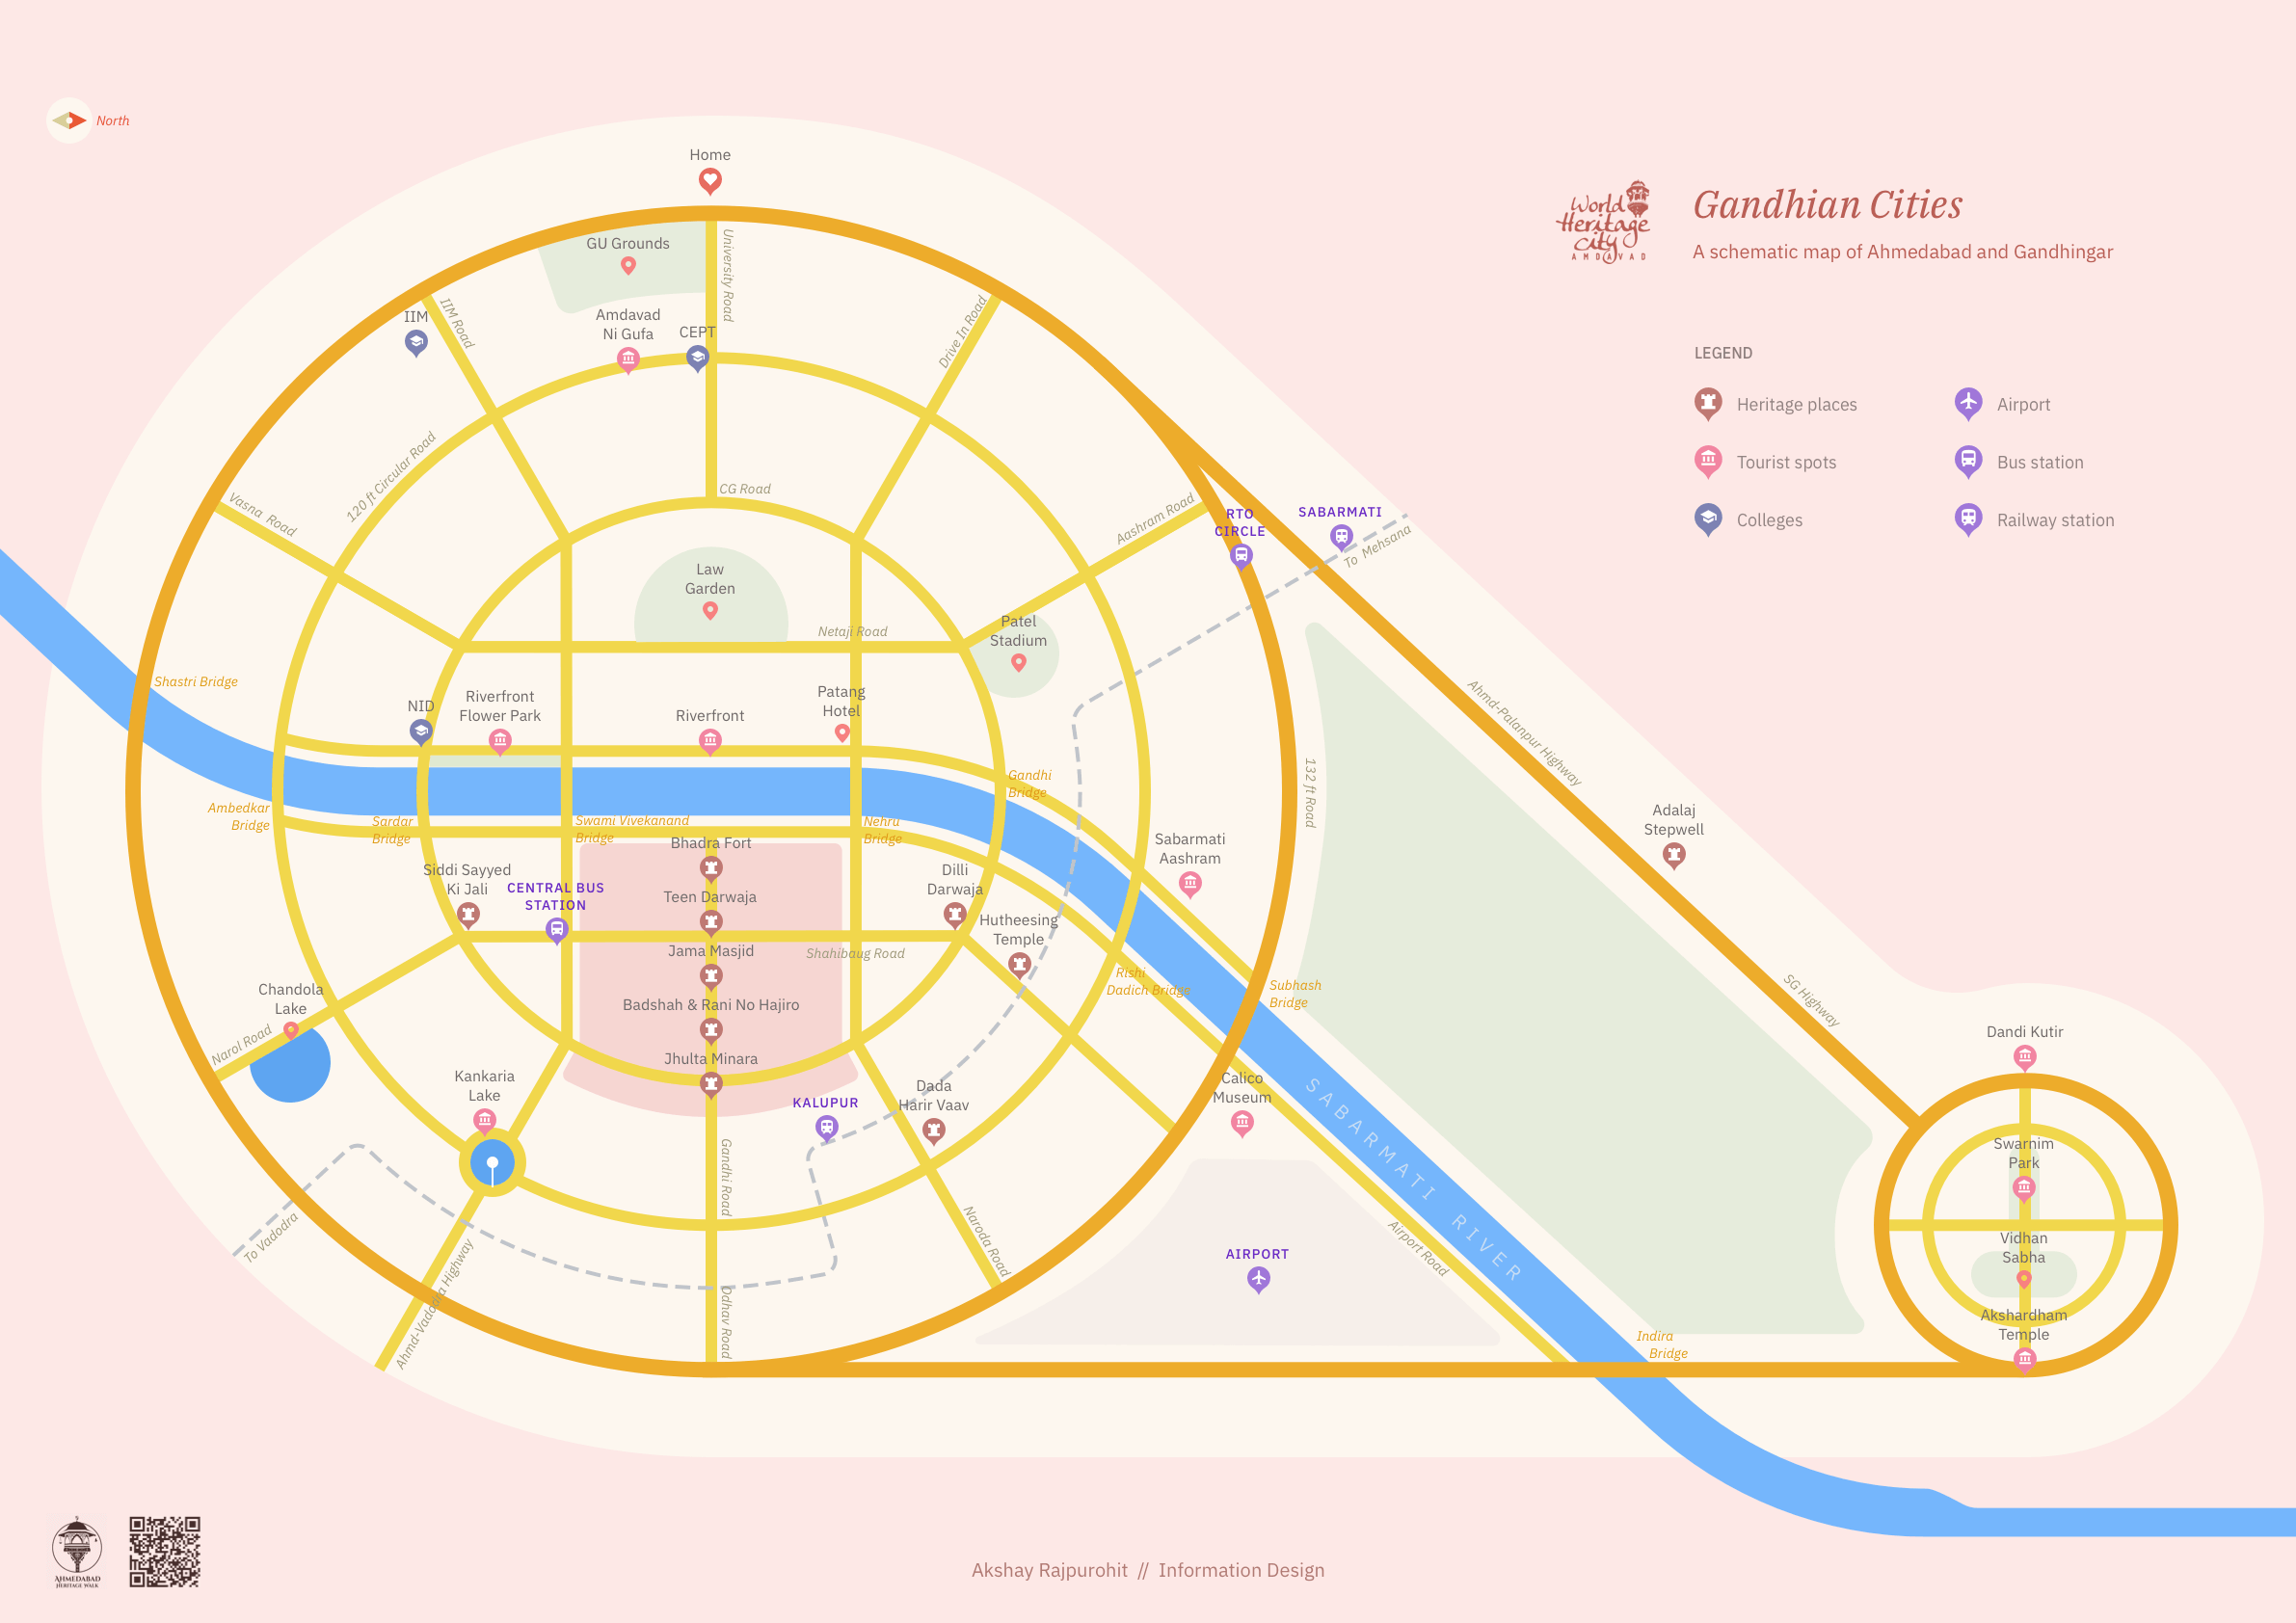 Final Schematic map of Ahmedabad & Gandhinagar by Akshay